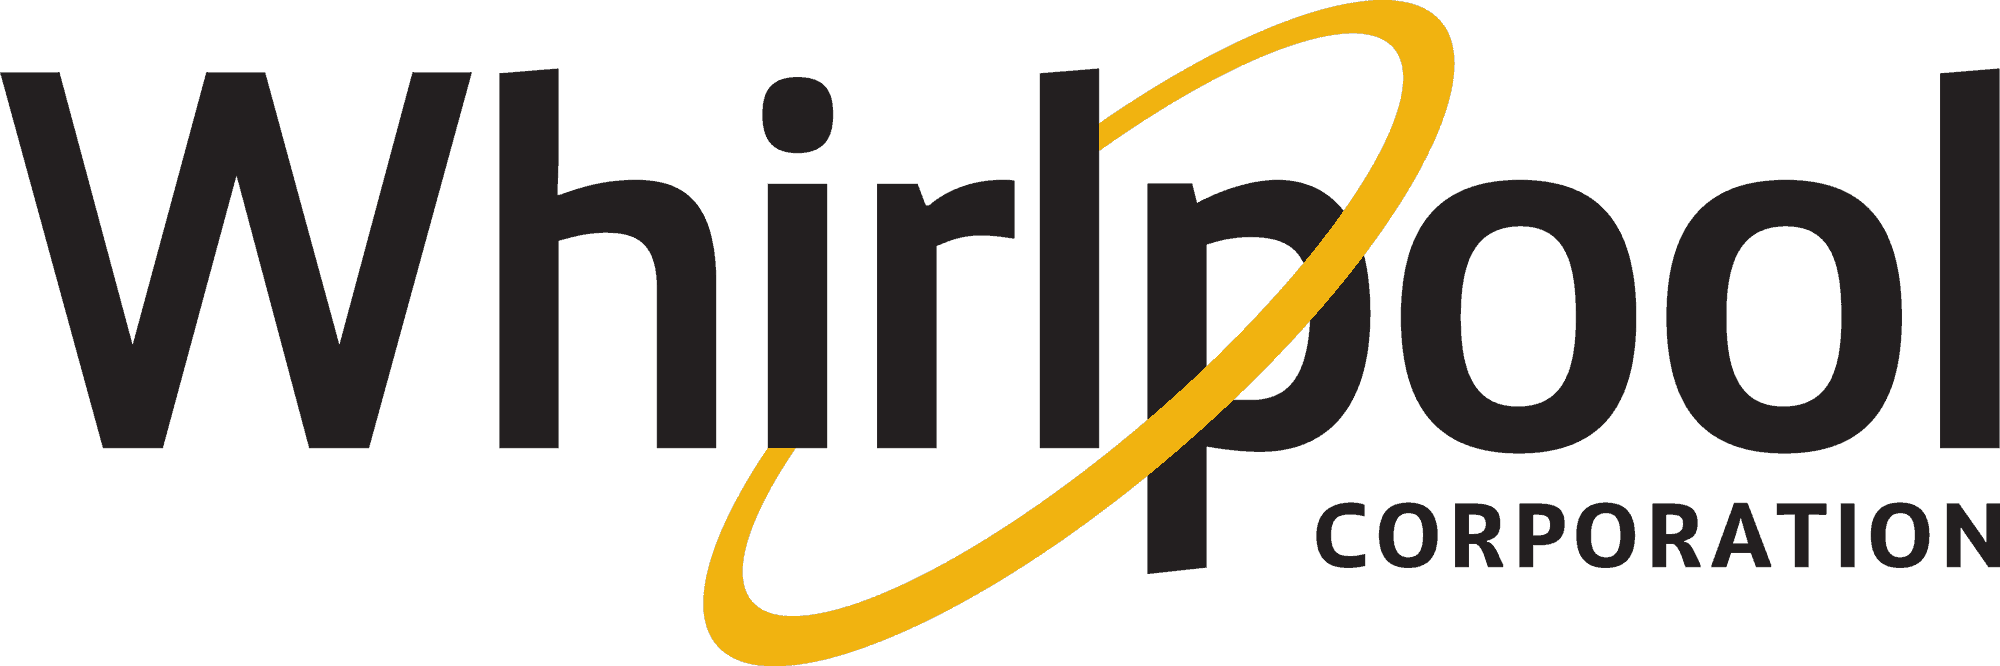 Nombre de la empresa Whirlpool Corporation